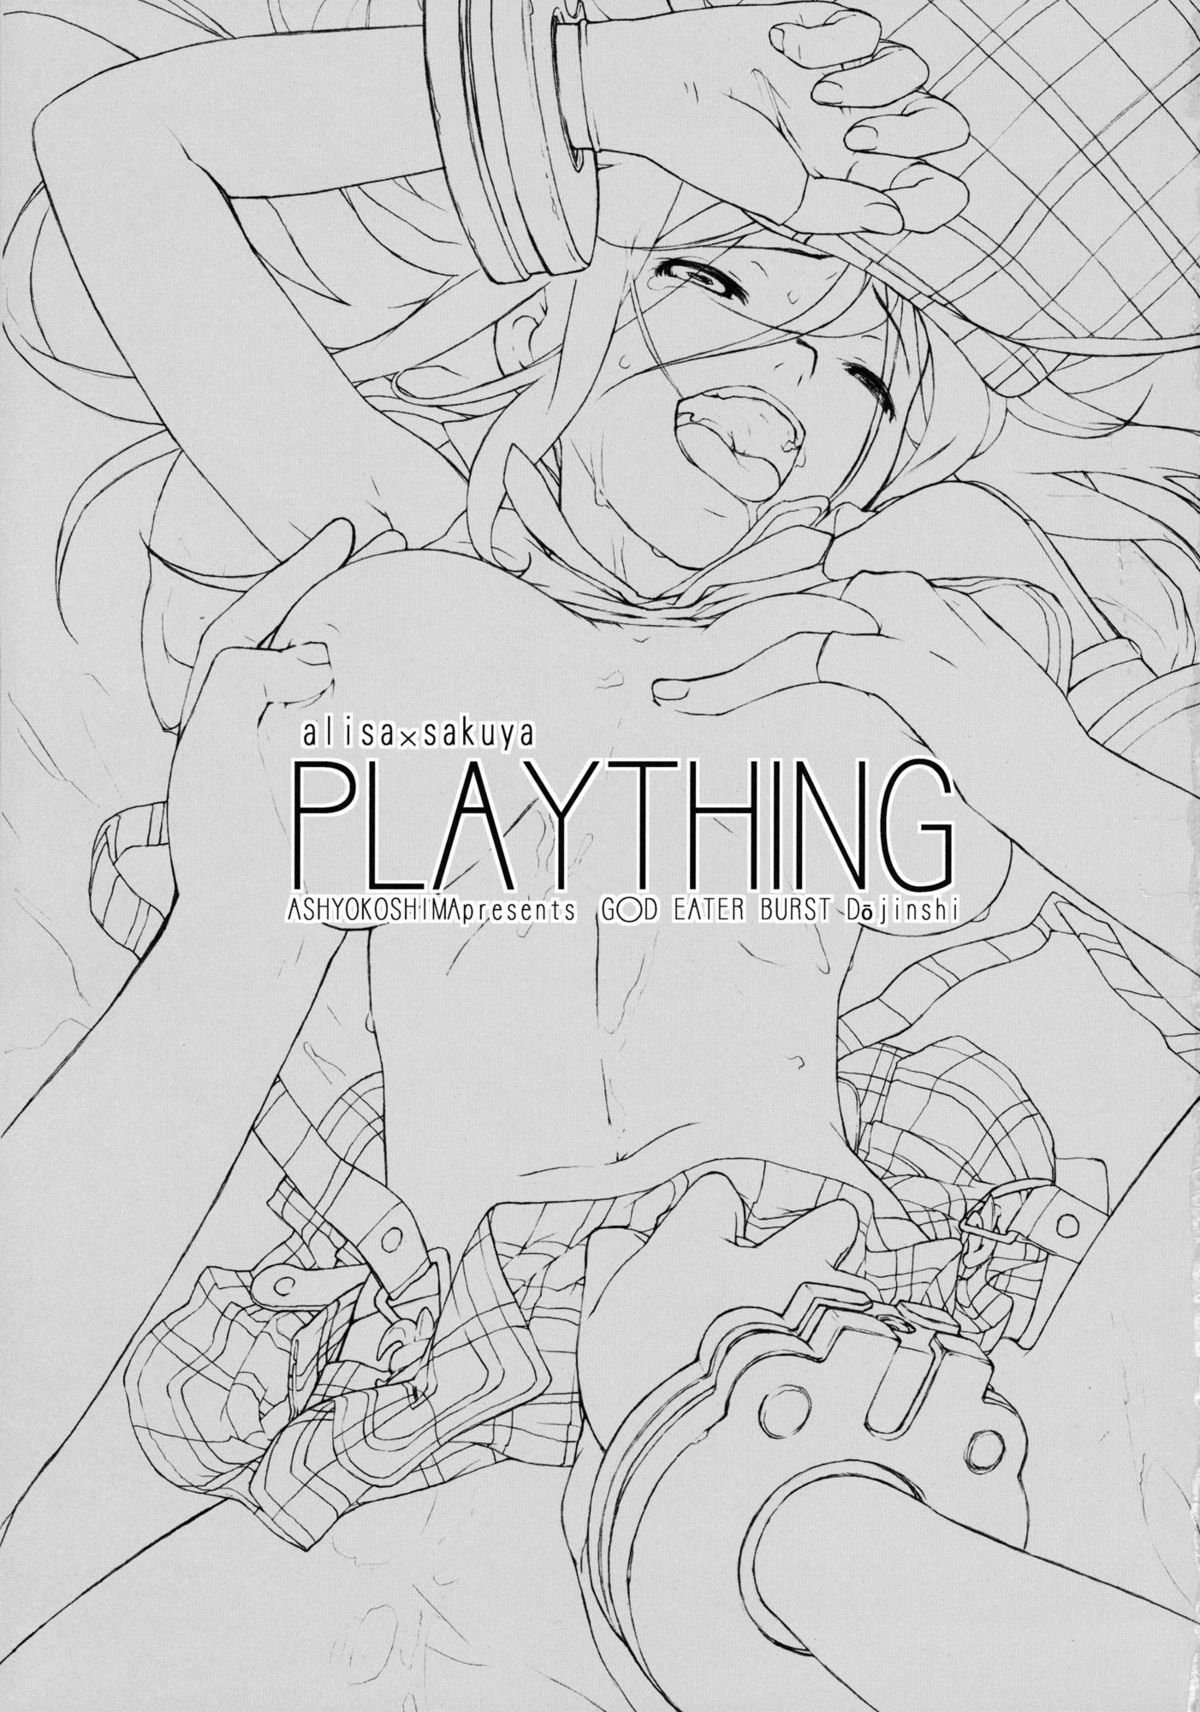 PLAYTHING